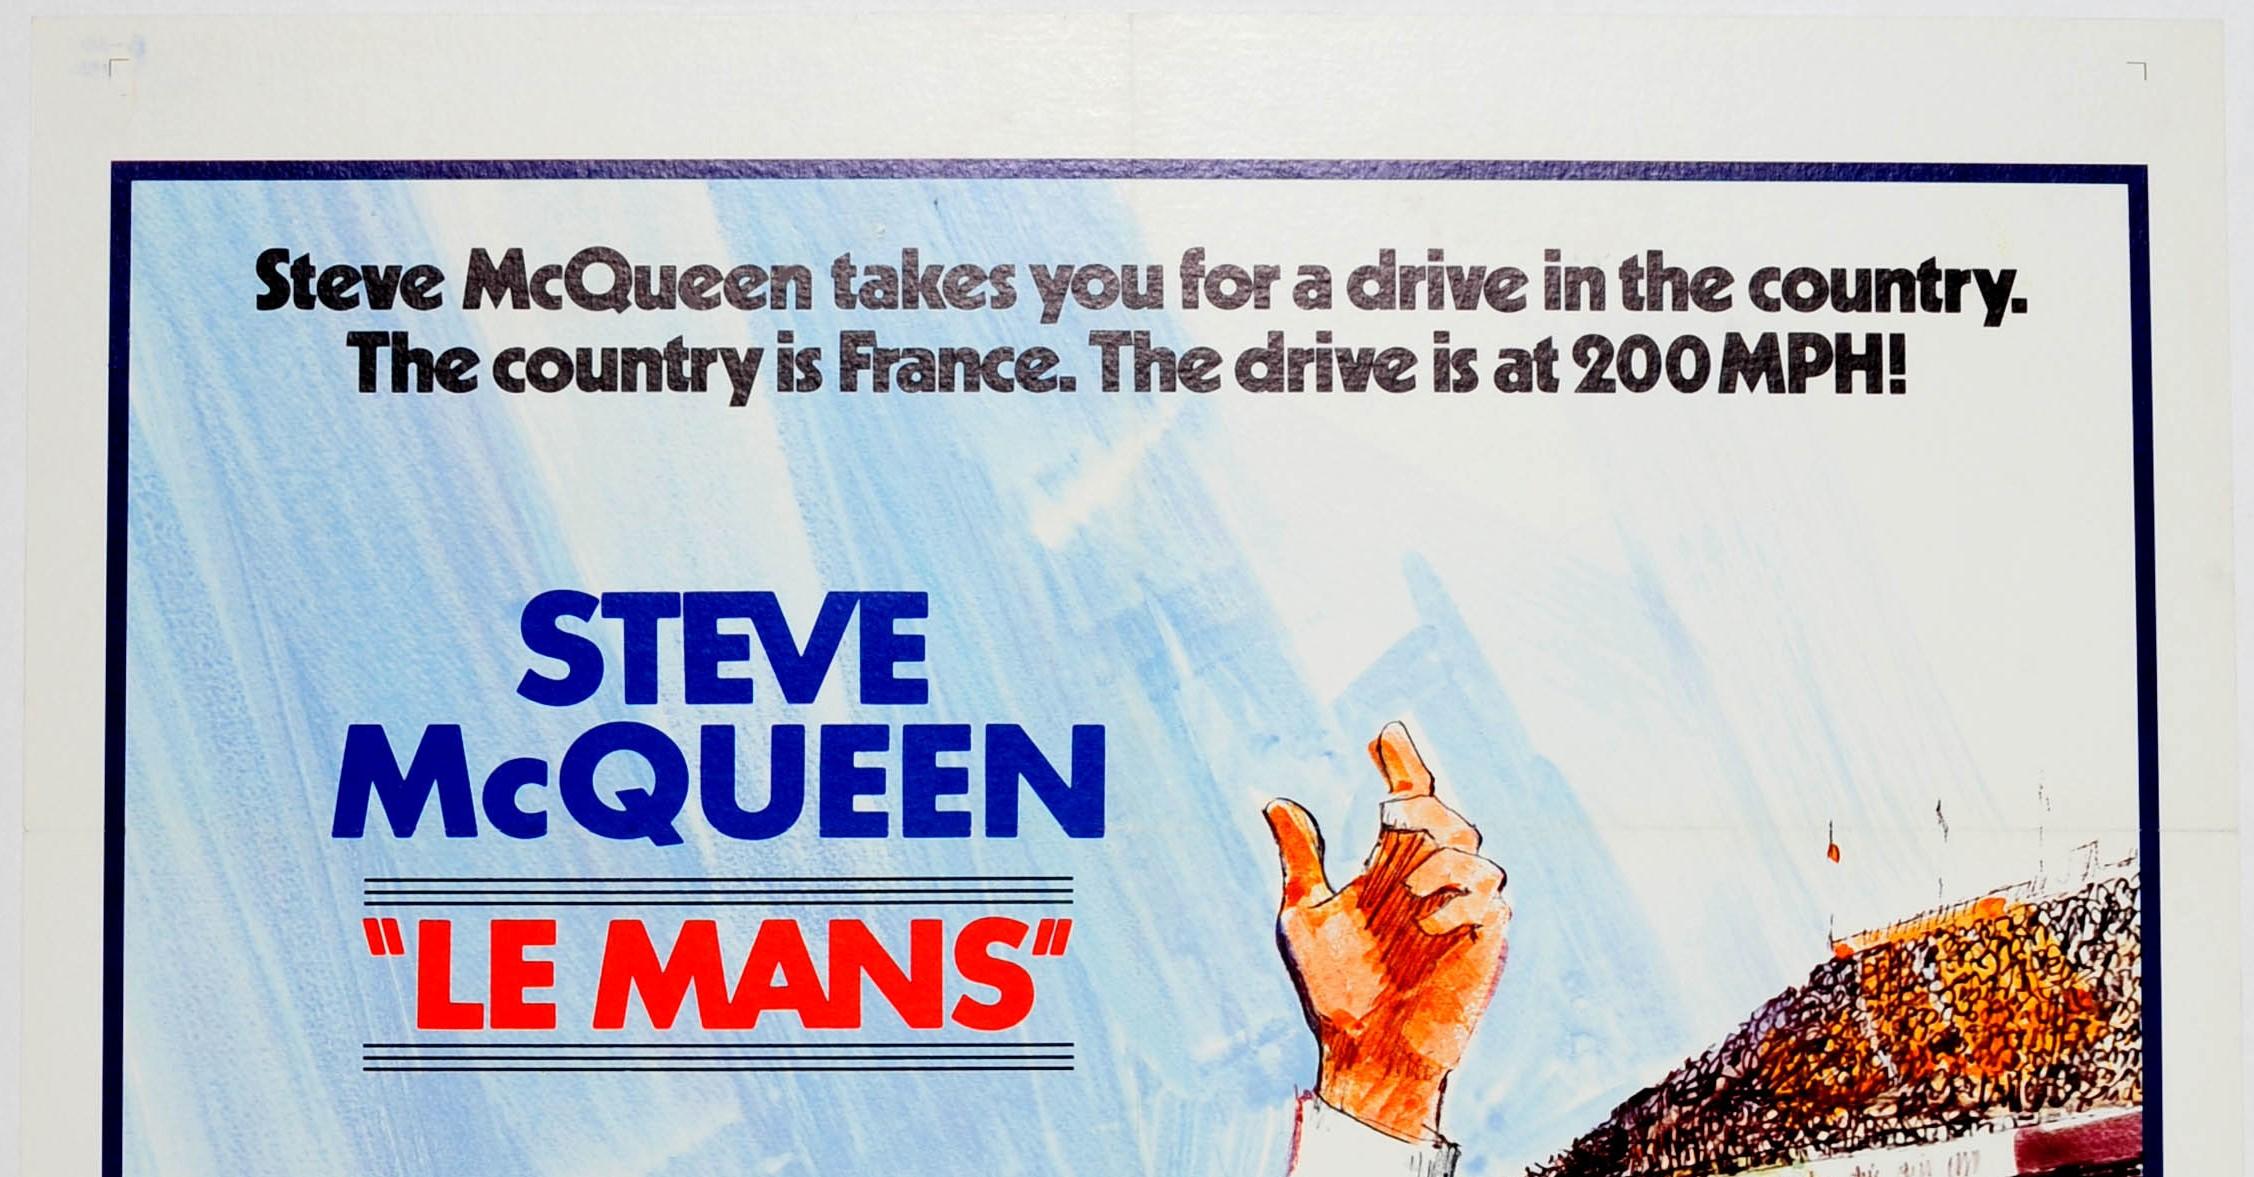 Original Vintage Movie Poster For Le Mans Car Racing Film Starring Steve McQueen - Print by Tom Jung